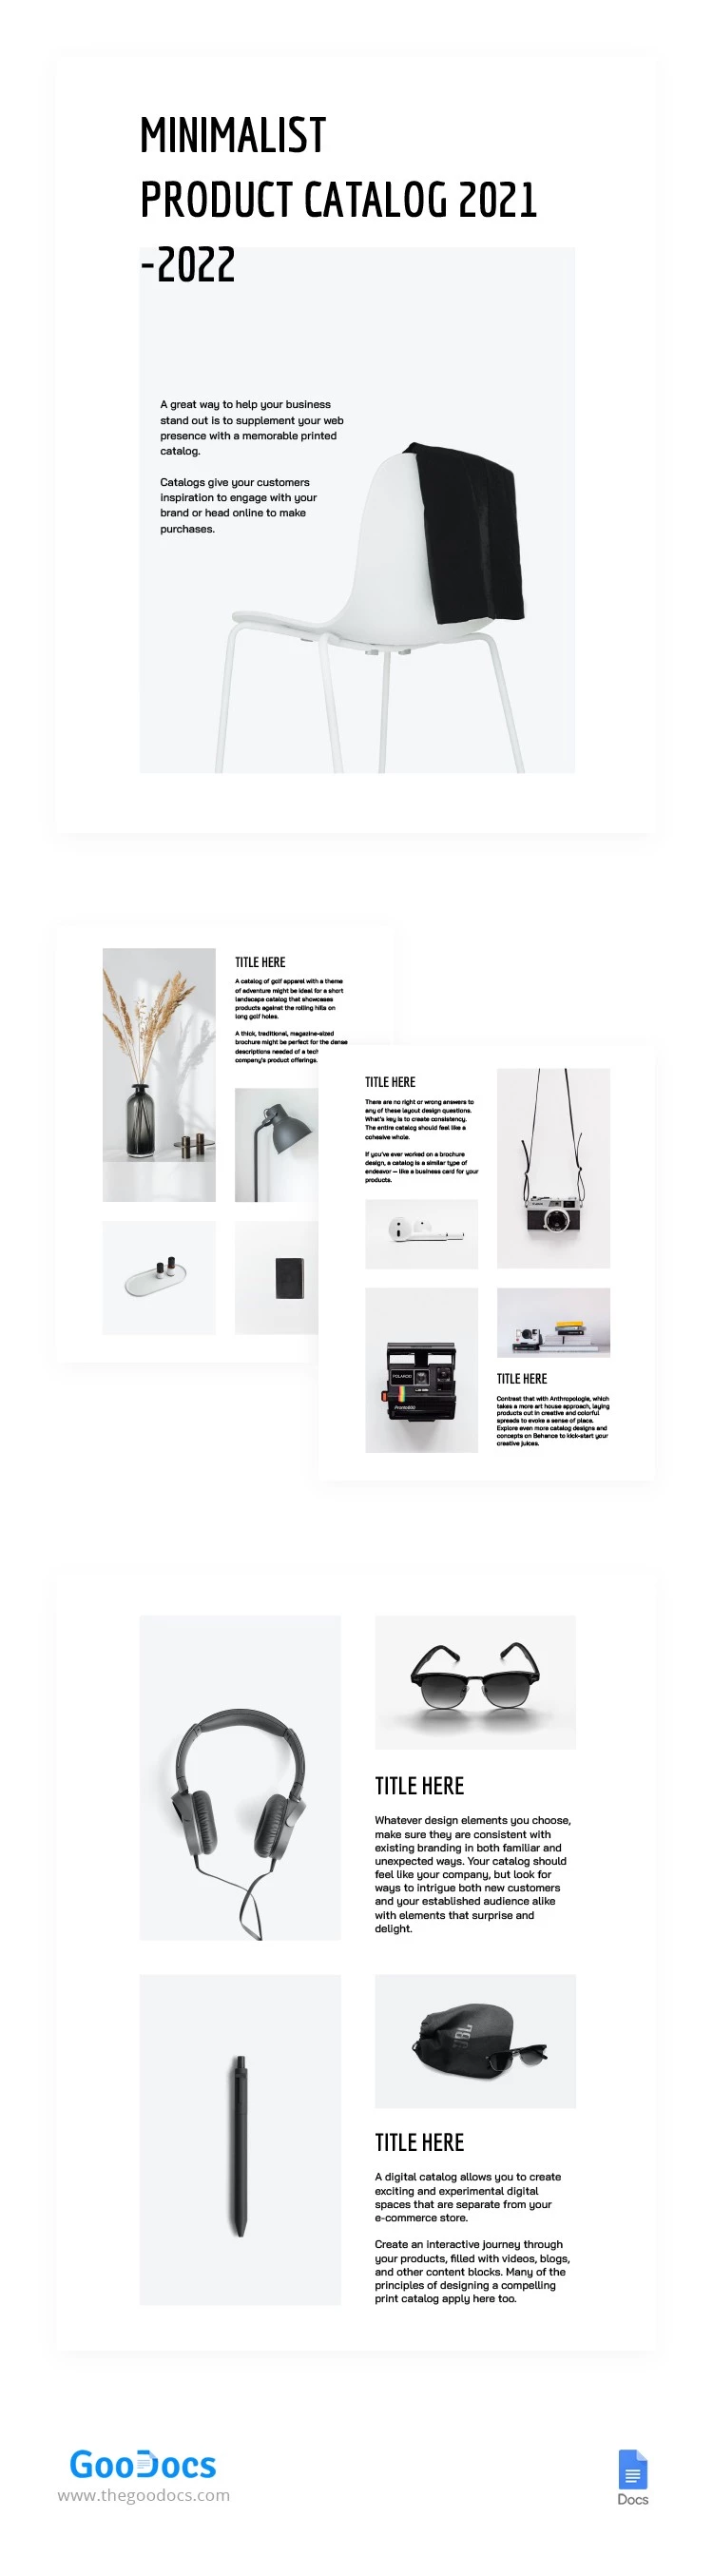 Catalogue de produits minimalistes - free Google Docs Template - 10063687